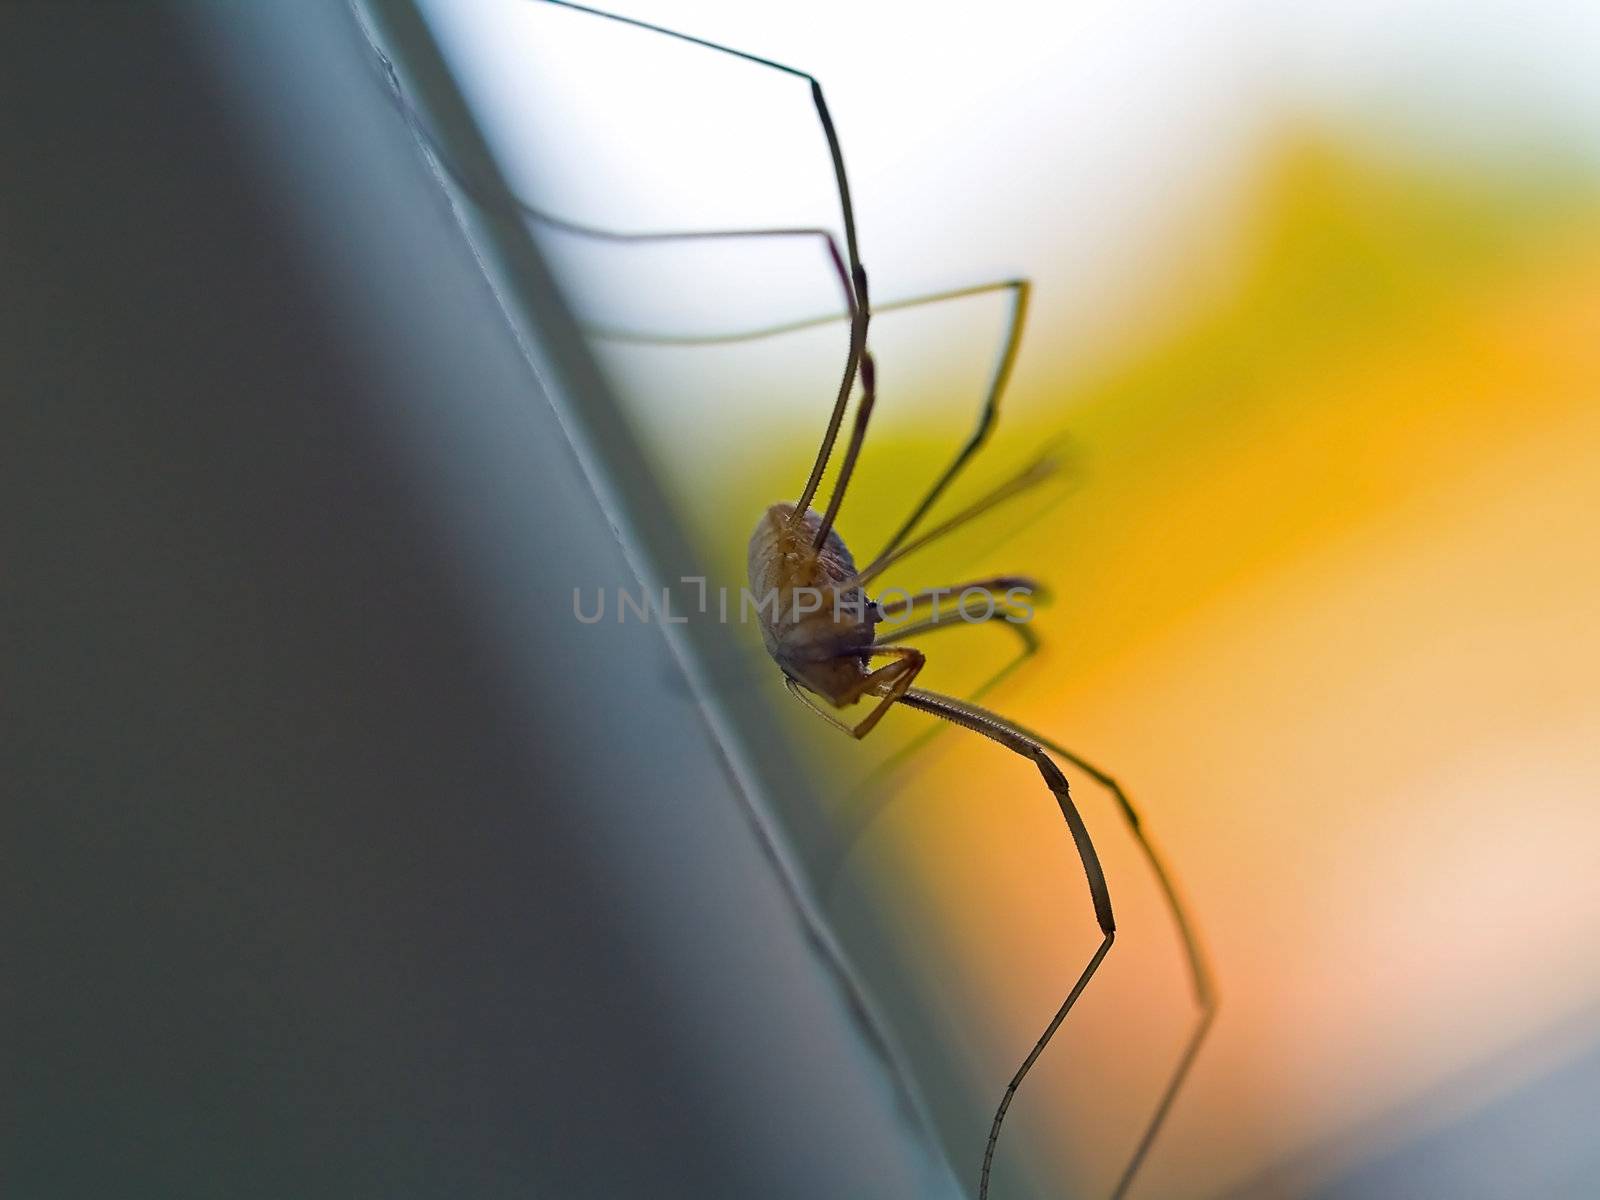 Daddy Longleg Spider by Frankljunior